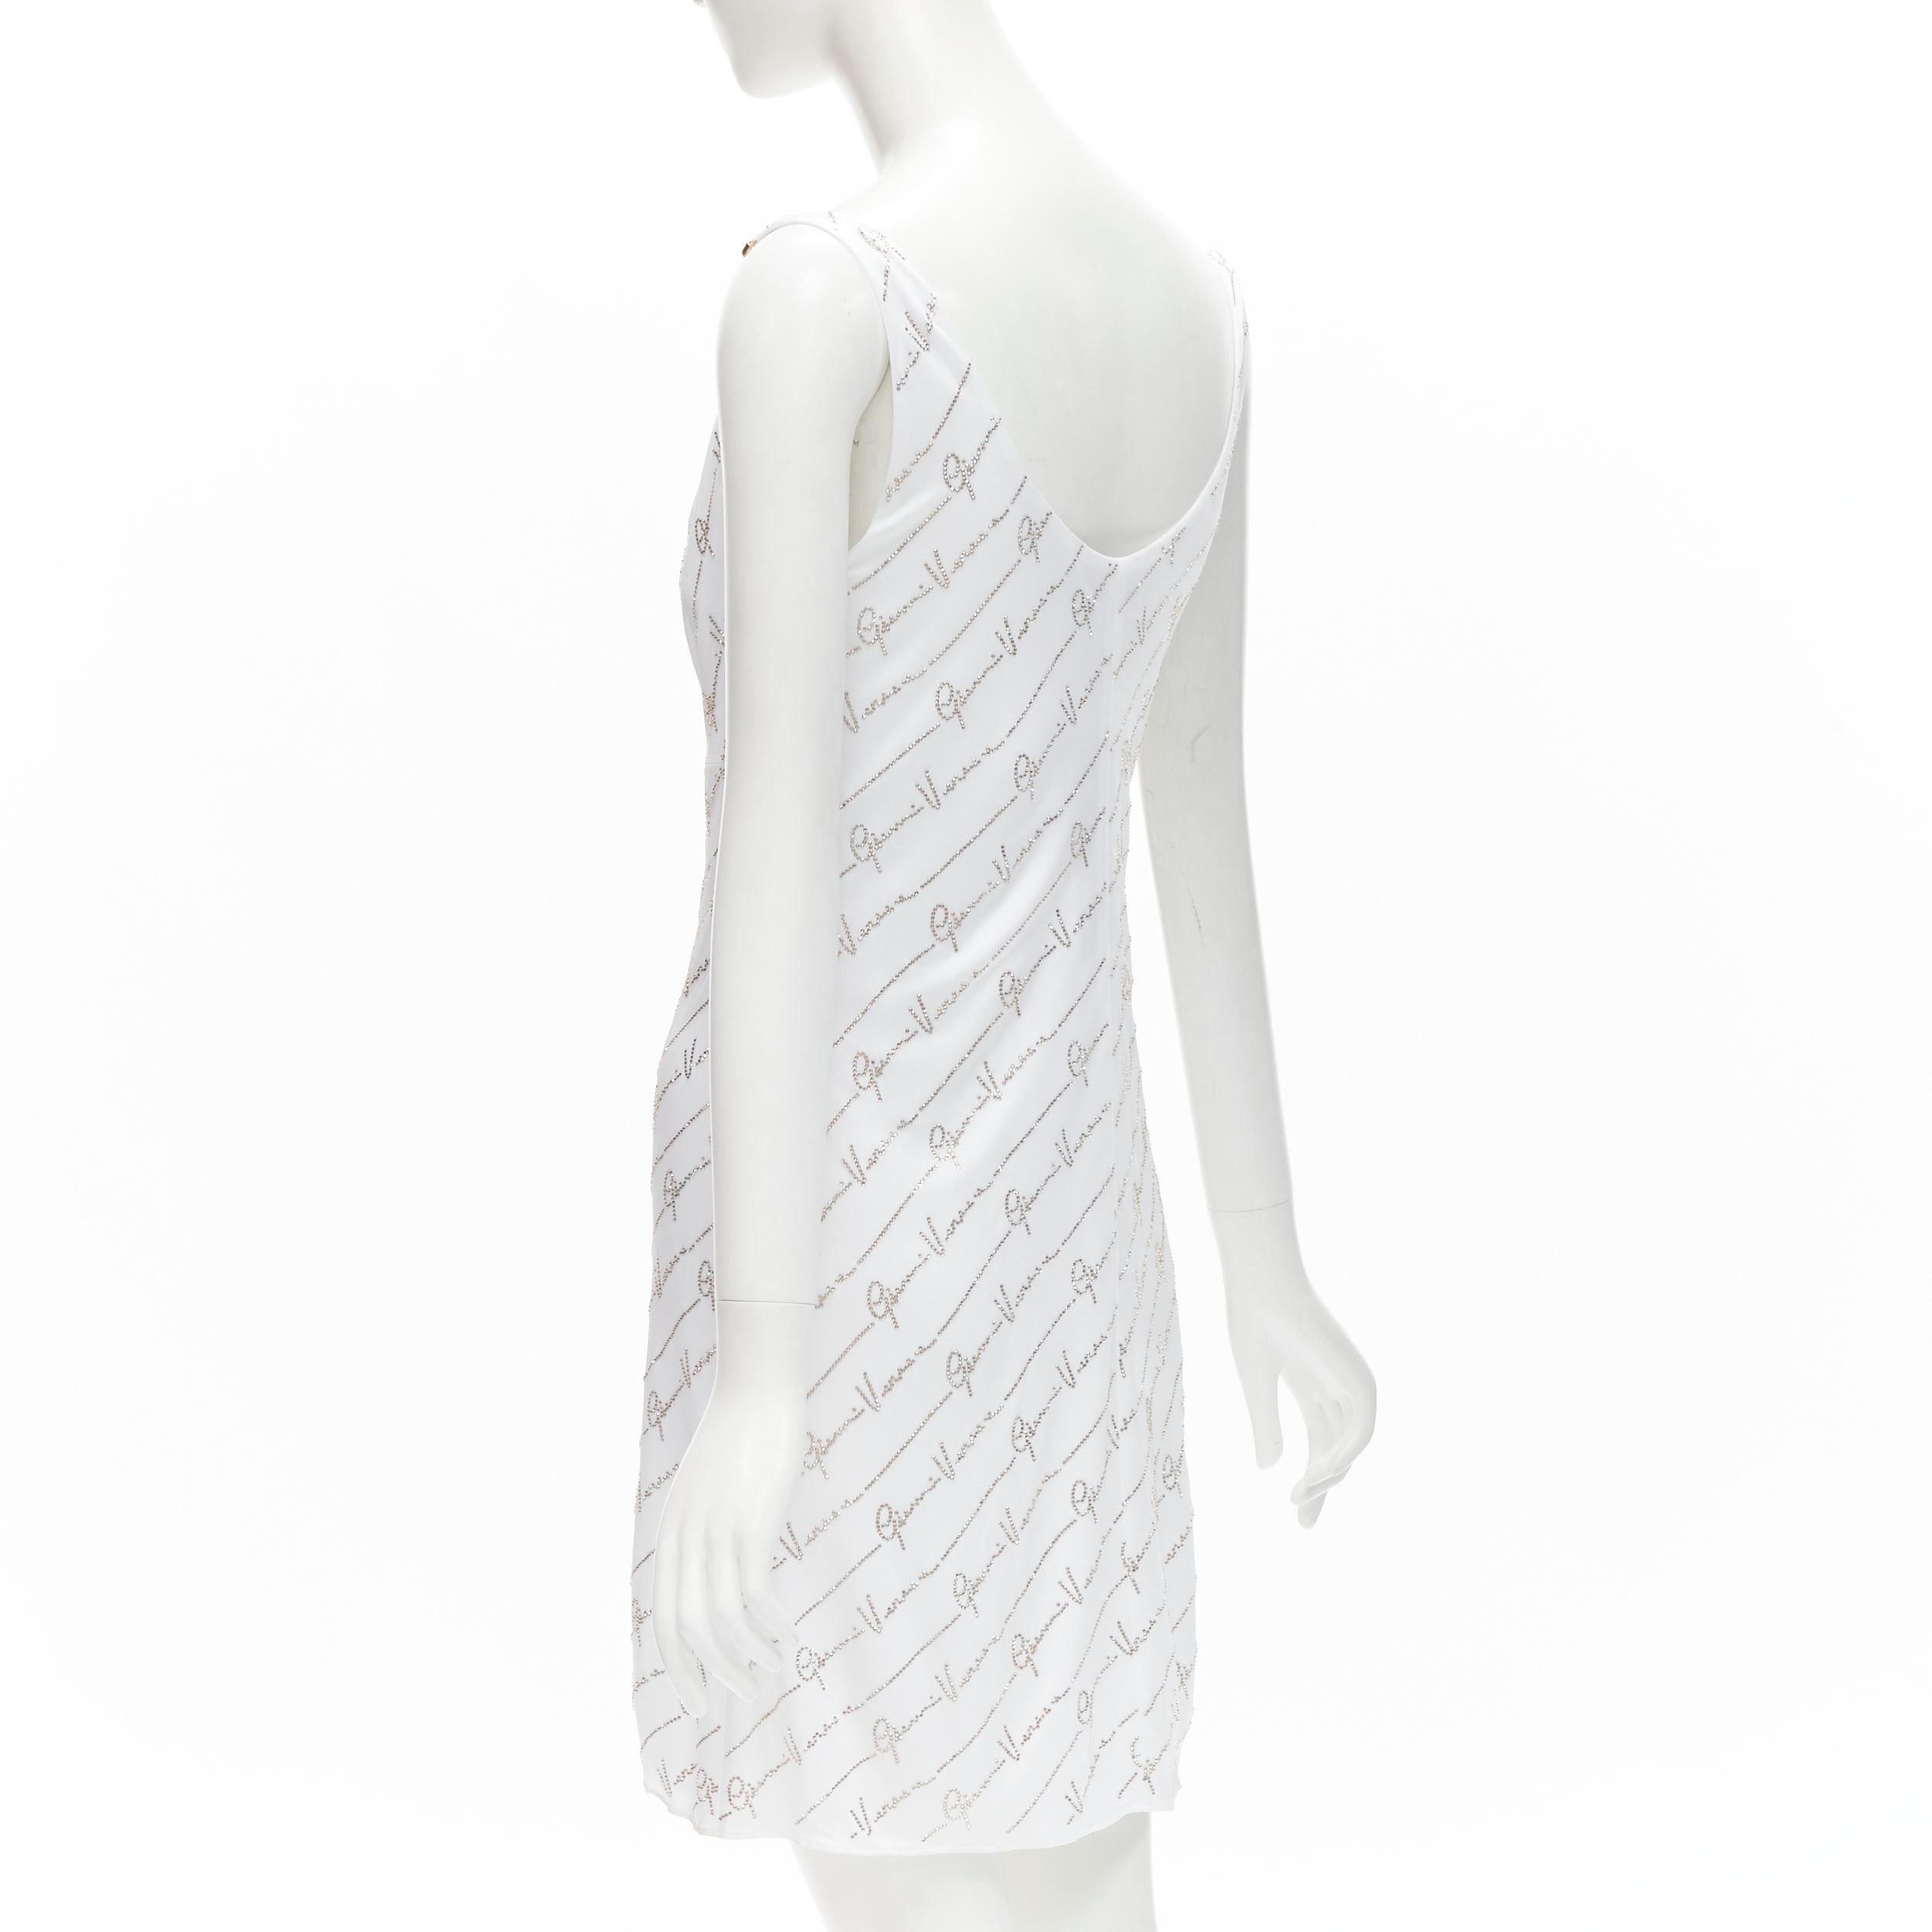 Versace - Robe Medusa incrustée de cristaux blancs incrustés, signature Gianni, taille IT 44 L, état neuf en vente 1